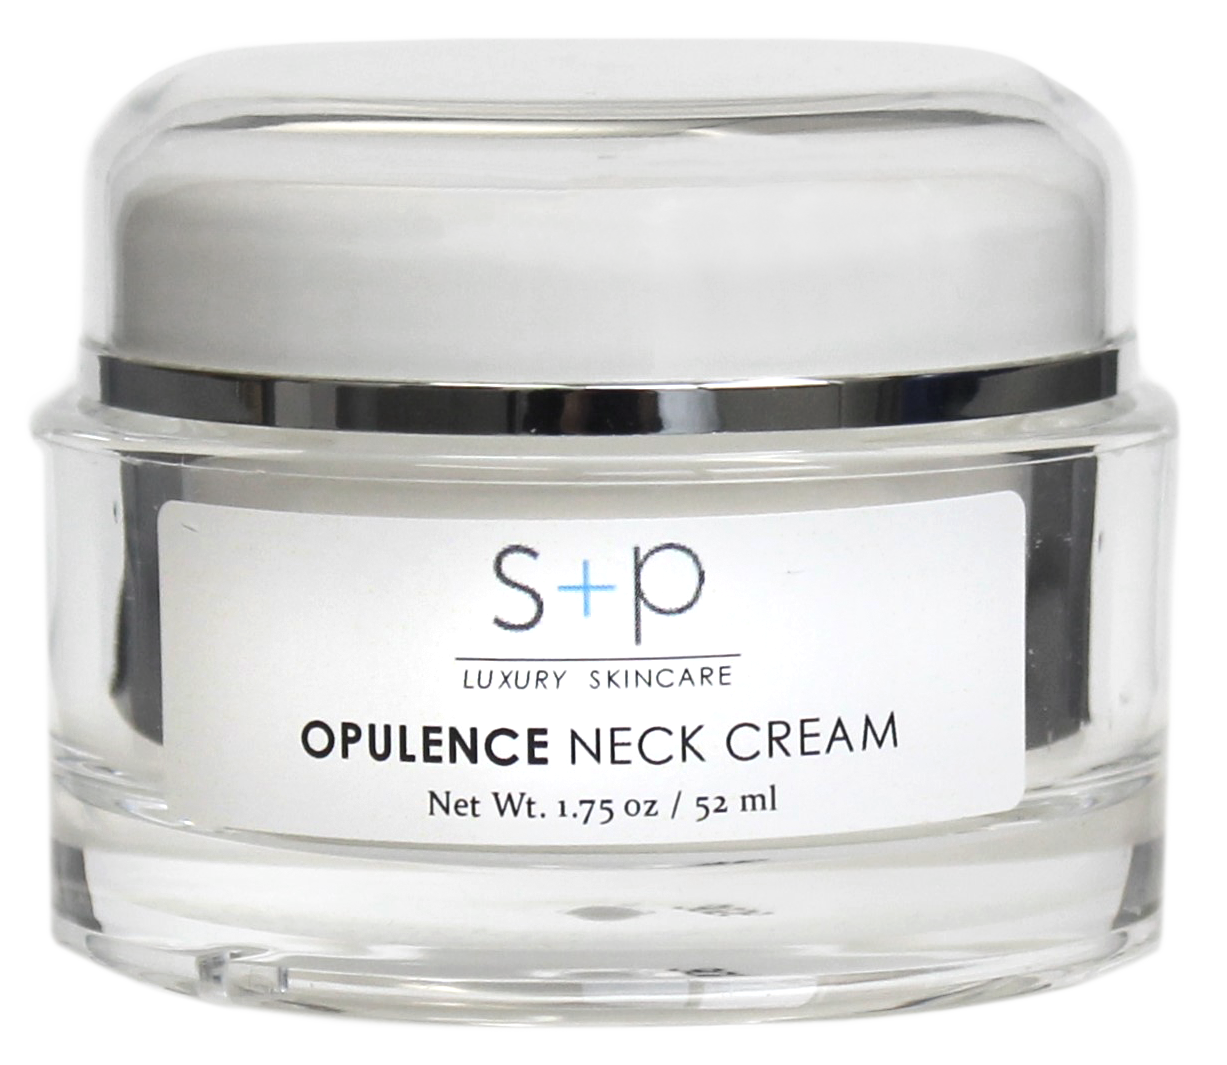 S+P Opulence Neck Cream-1.75oz